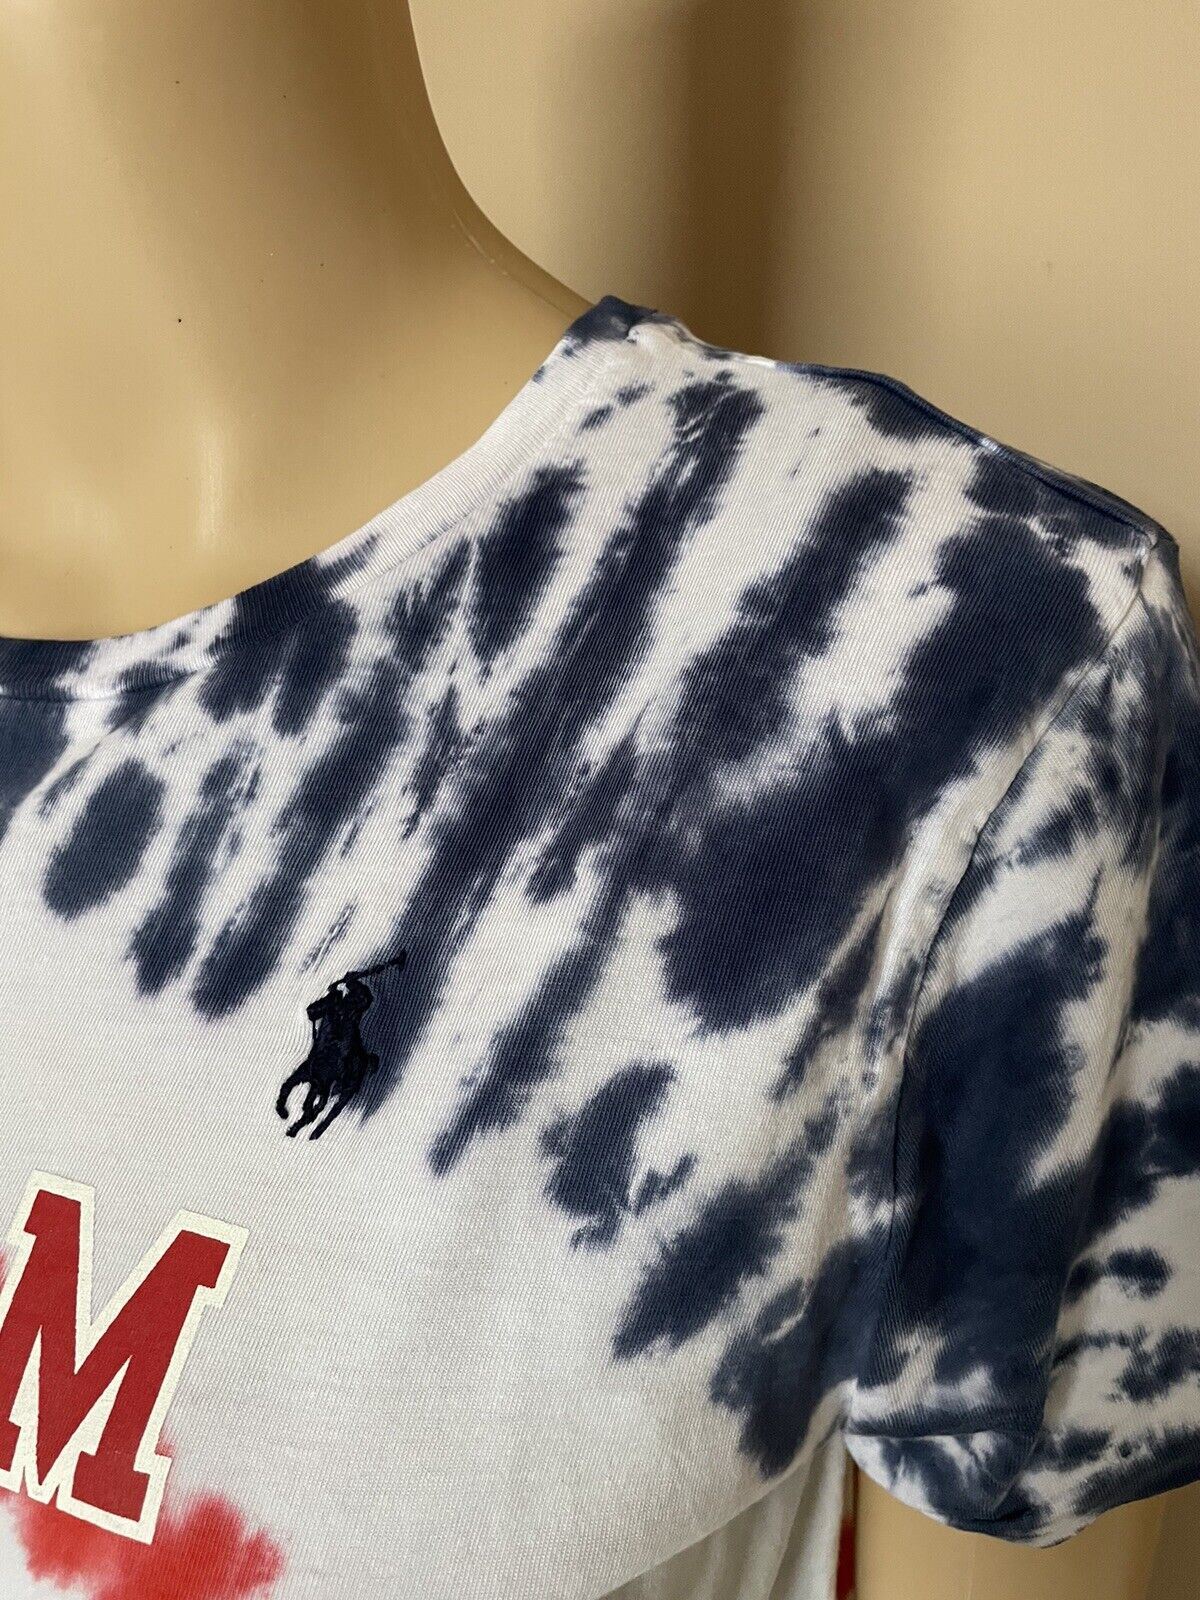 NWT Polo Ralph Lauren Multicolor Short Sleeve Team USA T-Shirt Small